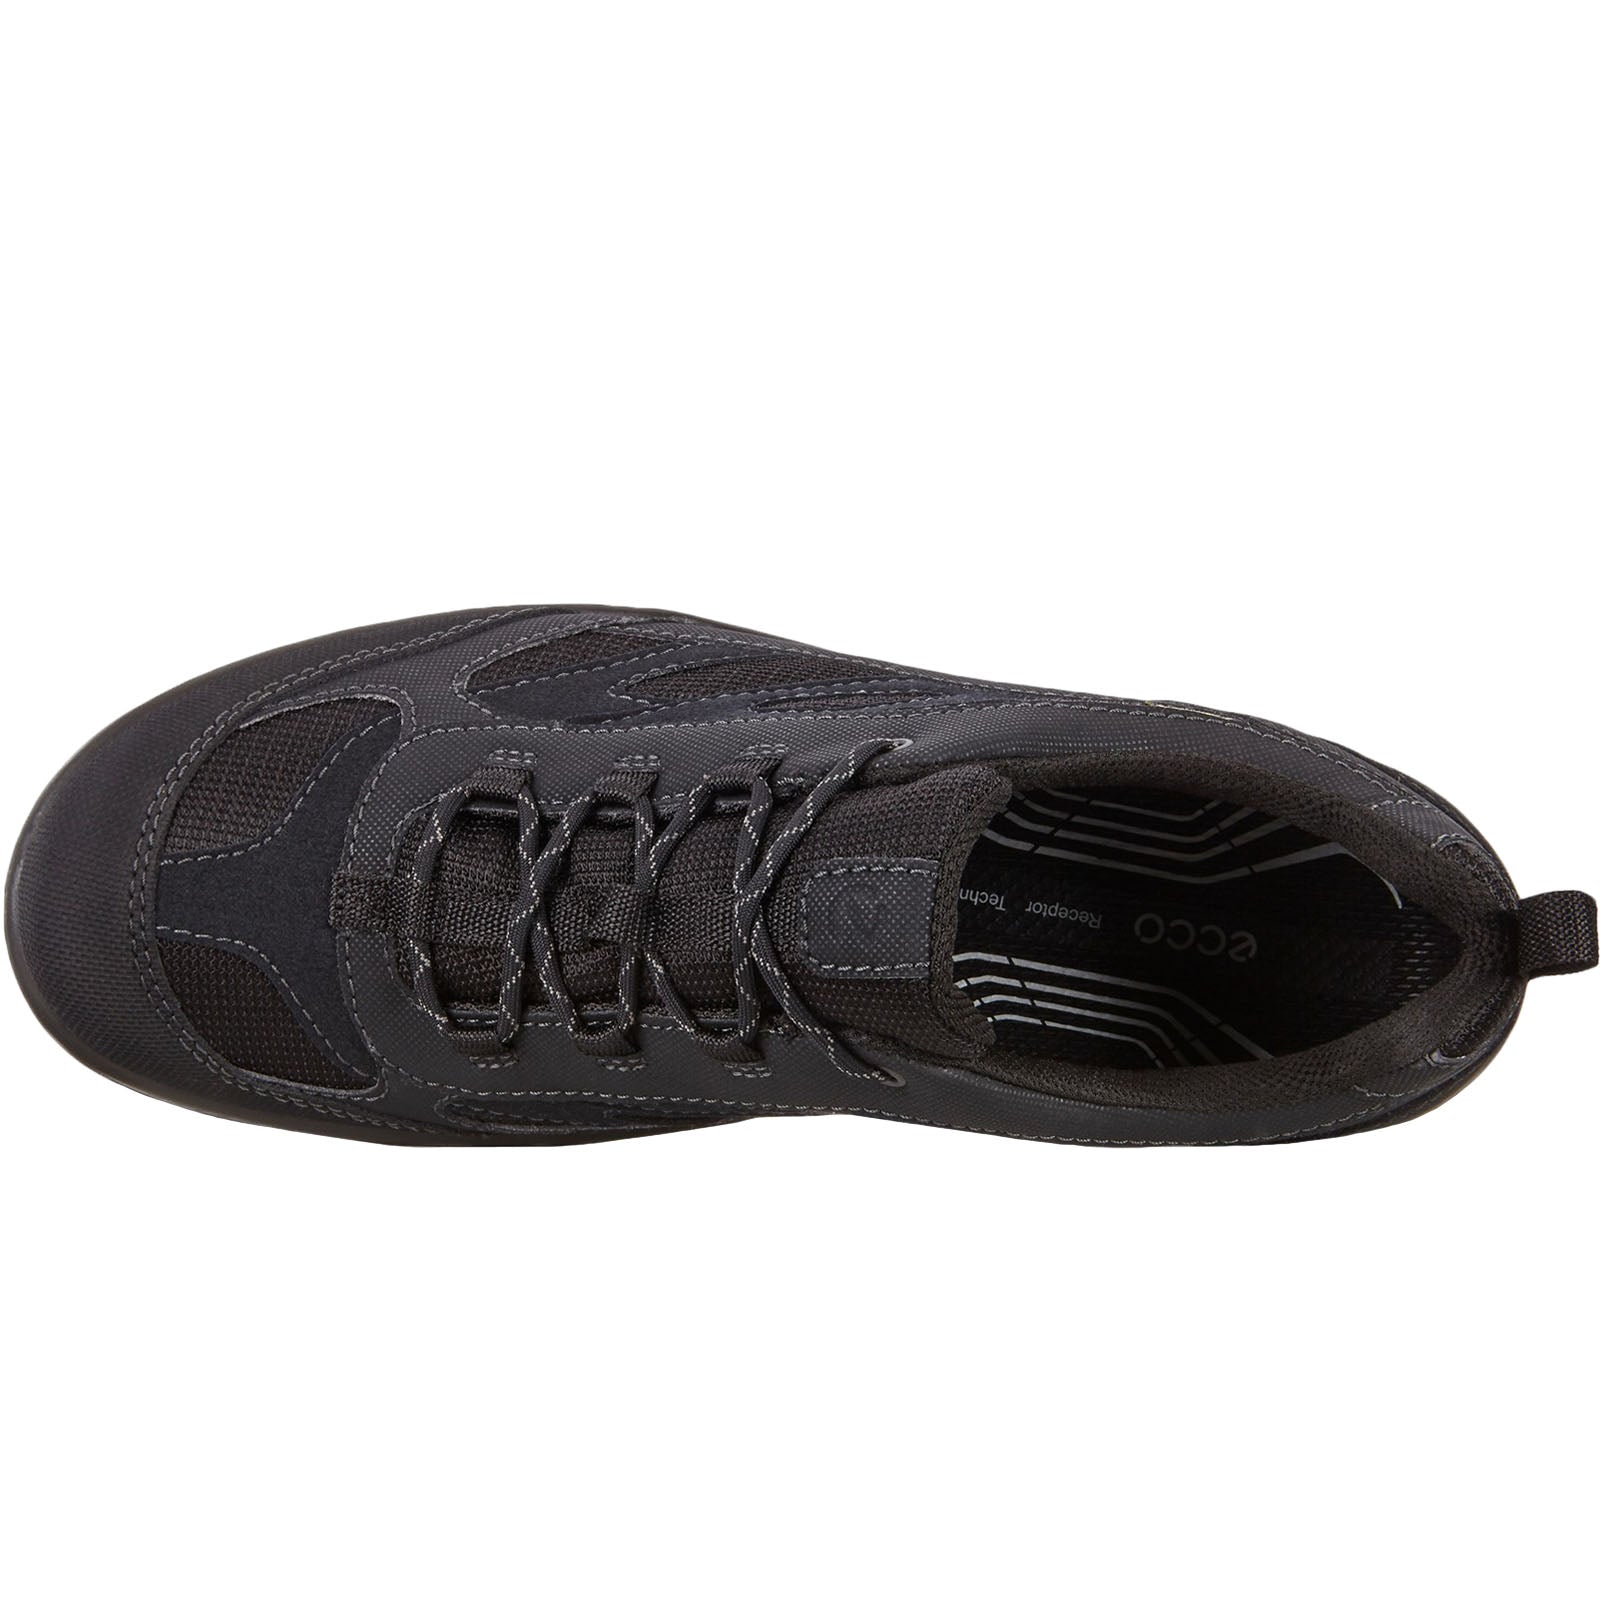 ECCO Mens XPEDITION Low Waterproof GORE-TEX Walking Boots Black – Avenue 85